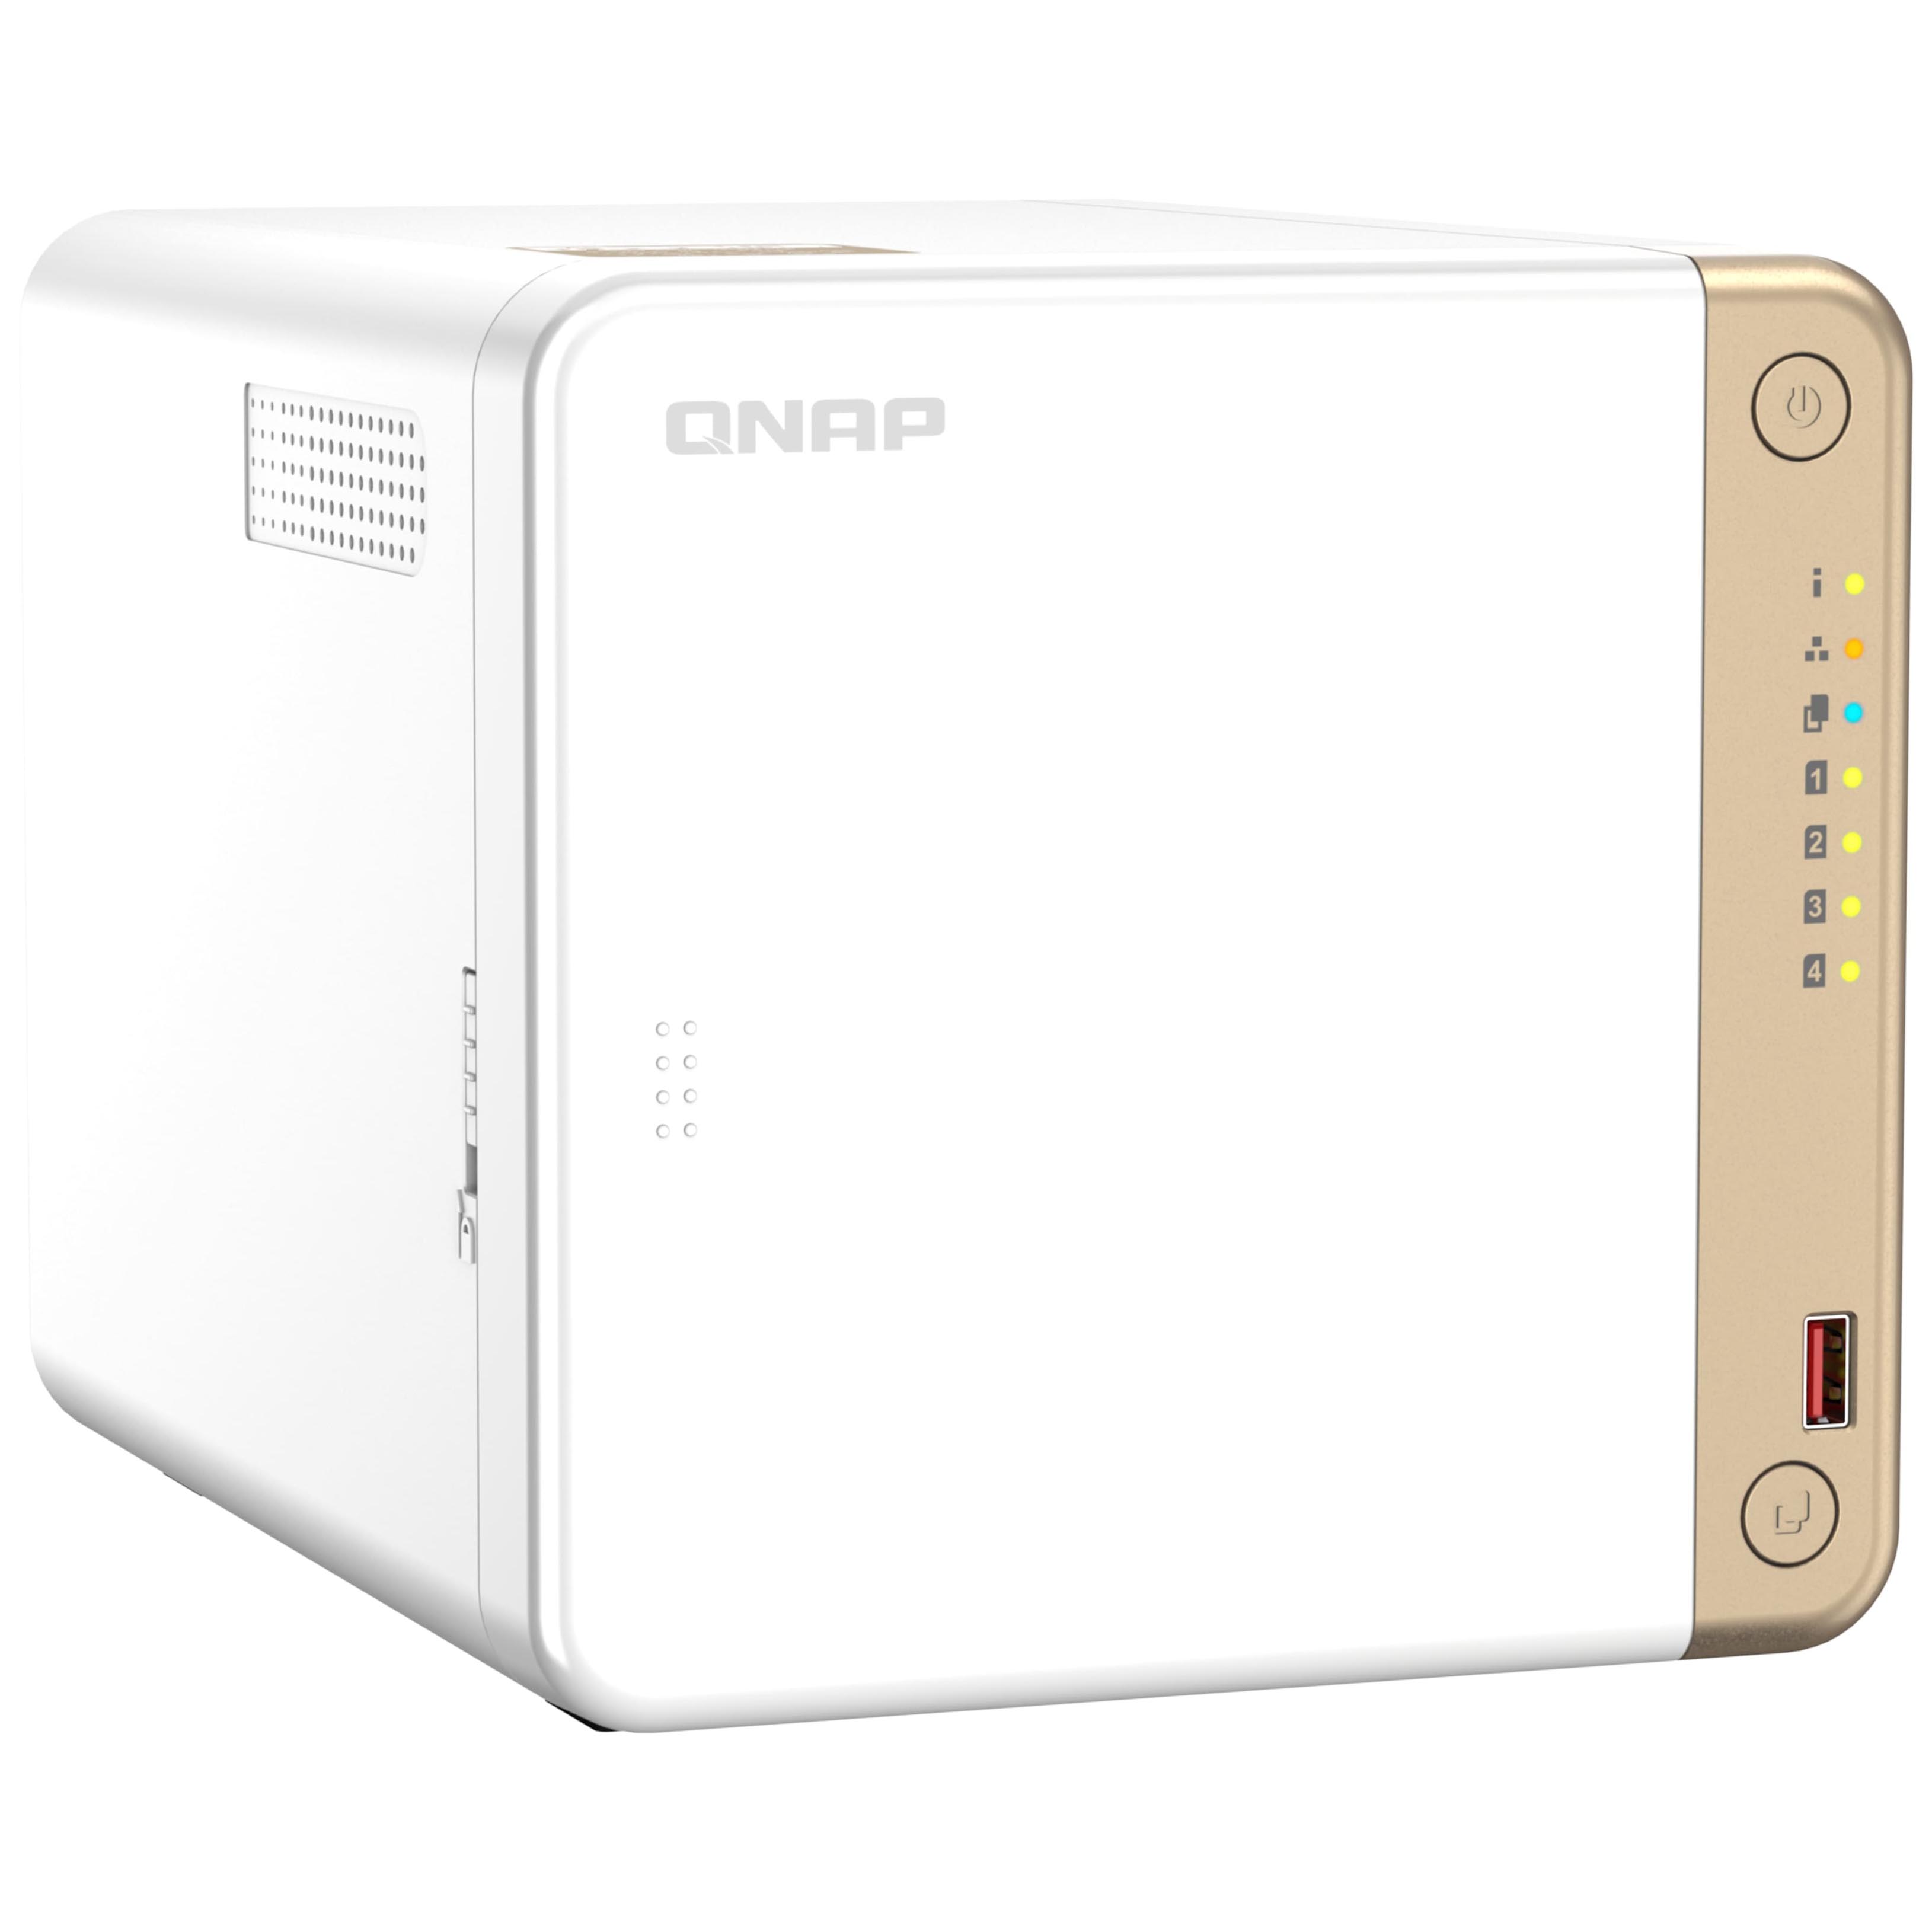 Сетевое хранилище QNAP TS-462 Nas, 4 отсека, без дисков, белый сетевое хранилище qnap nas d2